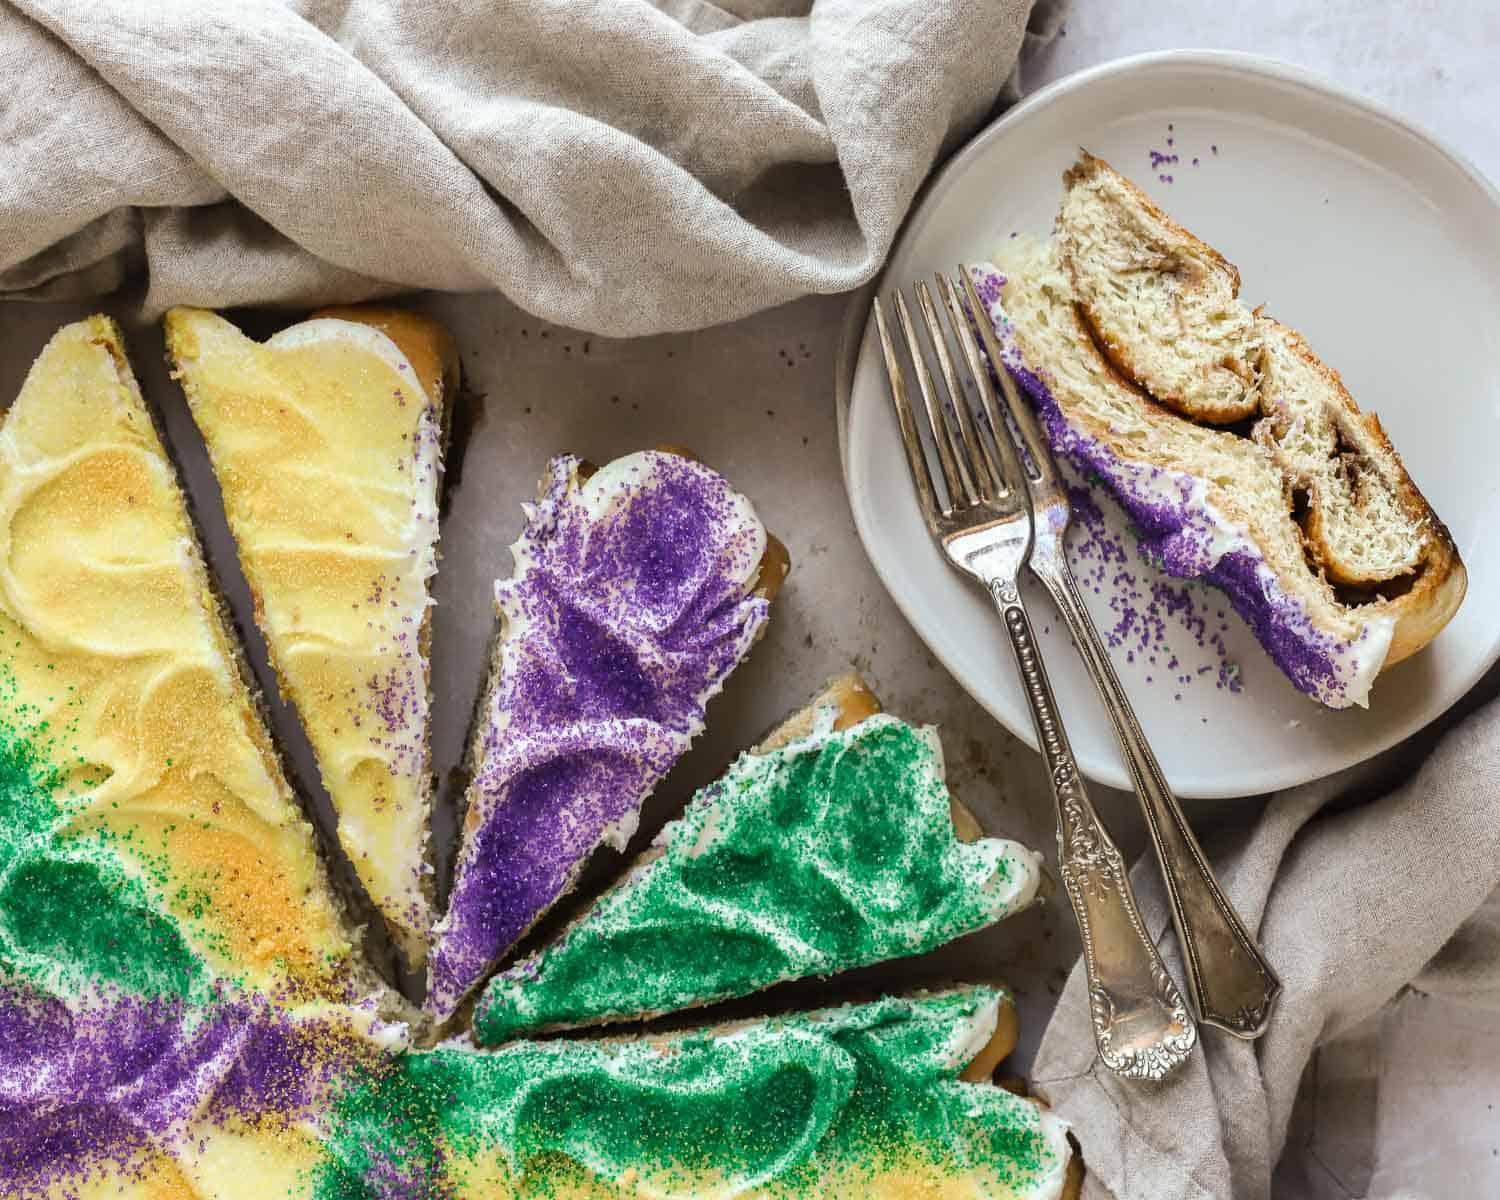 King Bundt Cake Recipe for Mardi Gras by The Redhead Baker